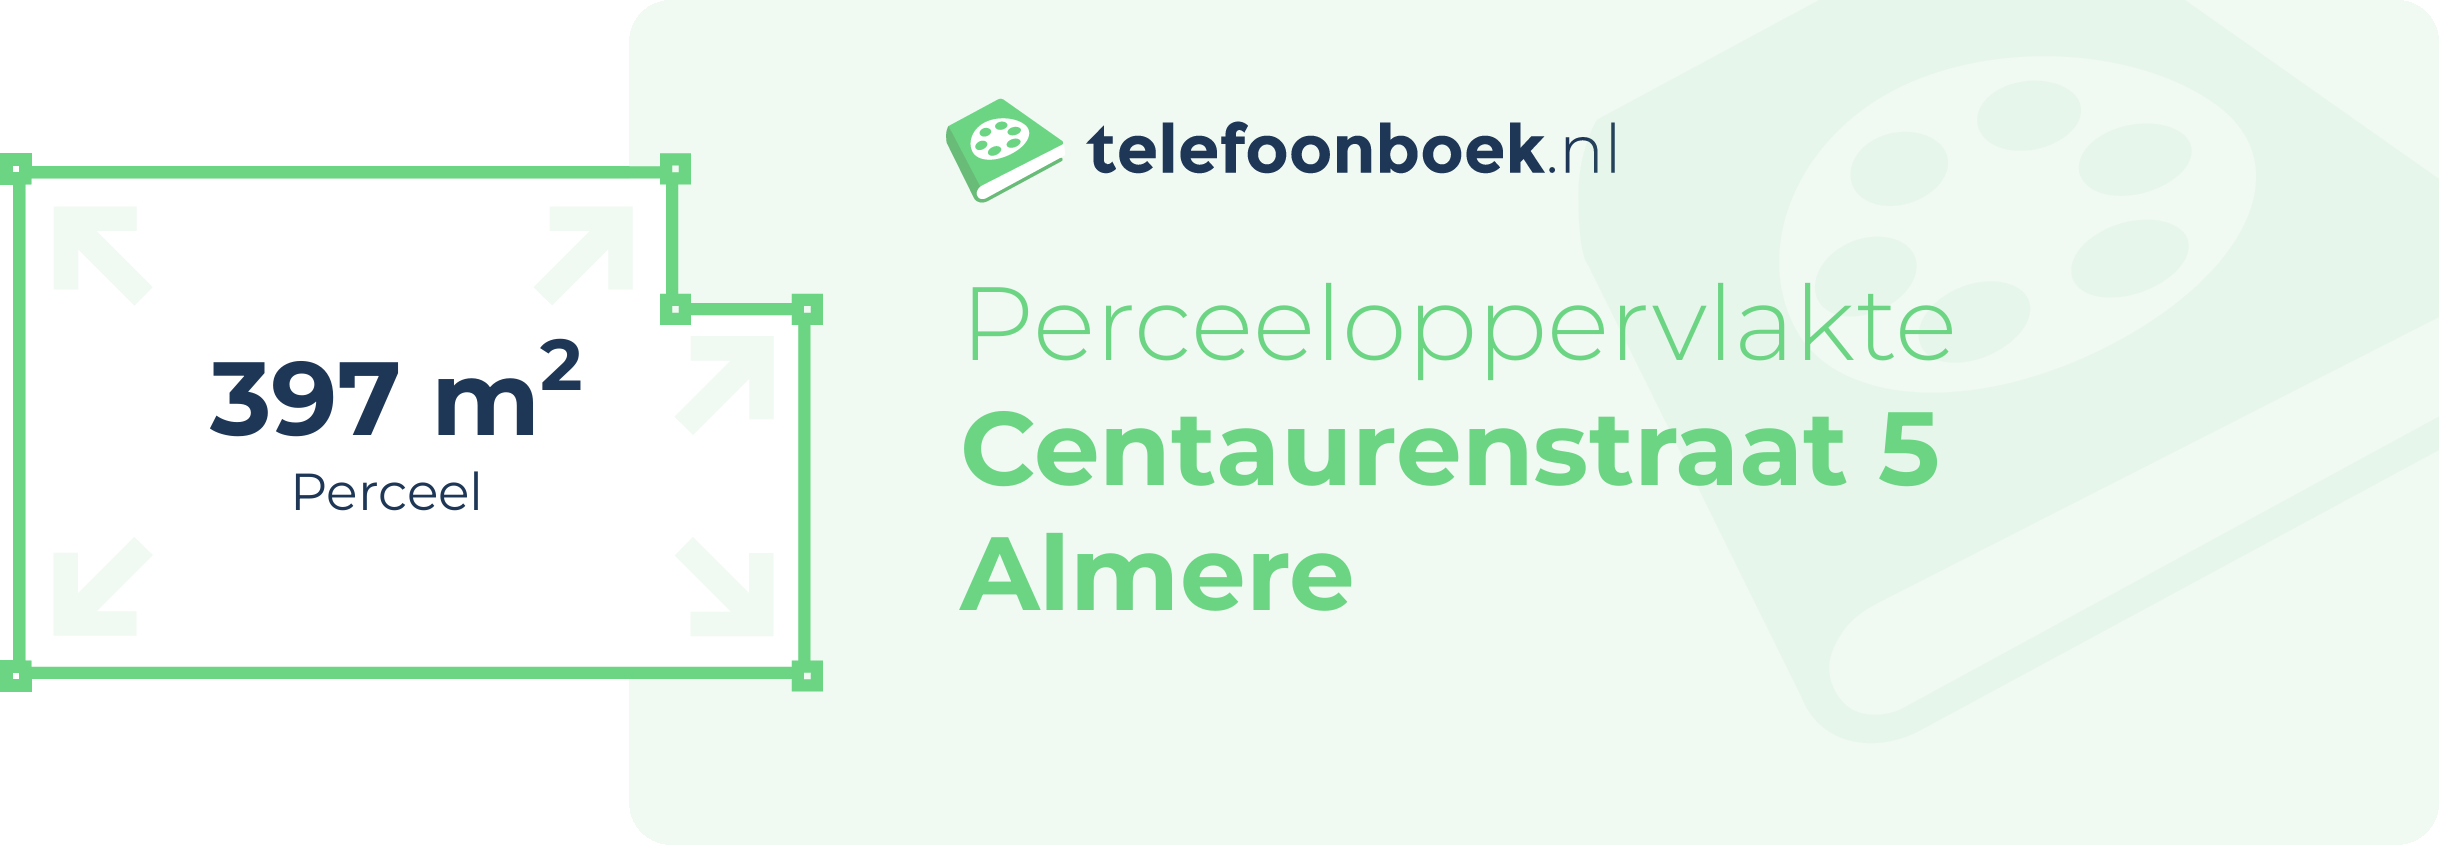 Perceeloppervlakte Centaurenstraat 5 Almere